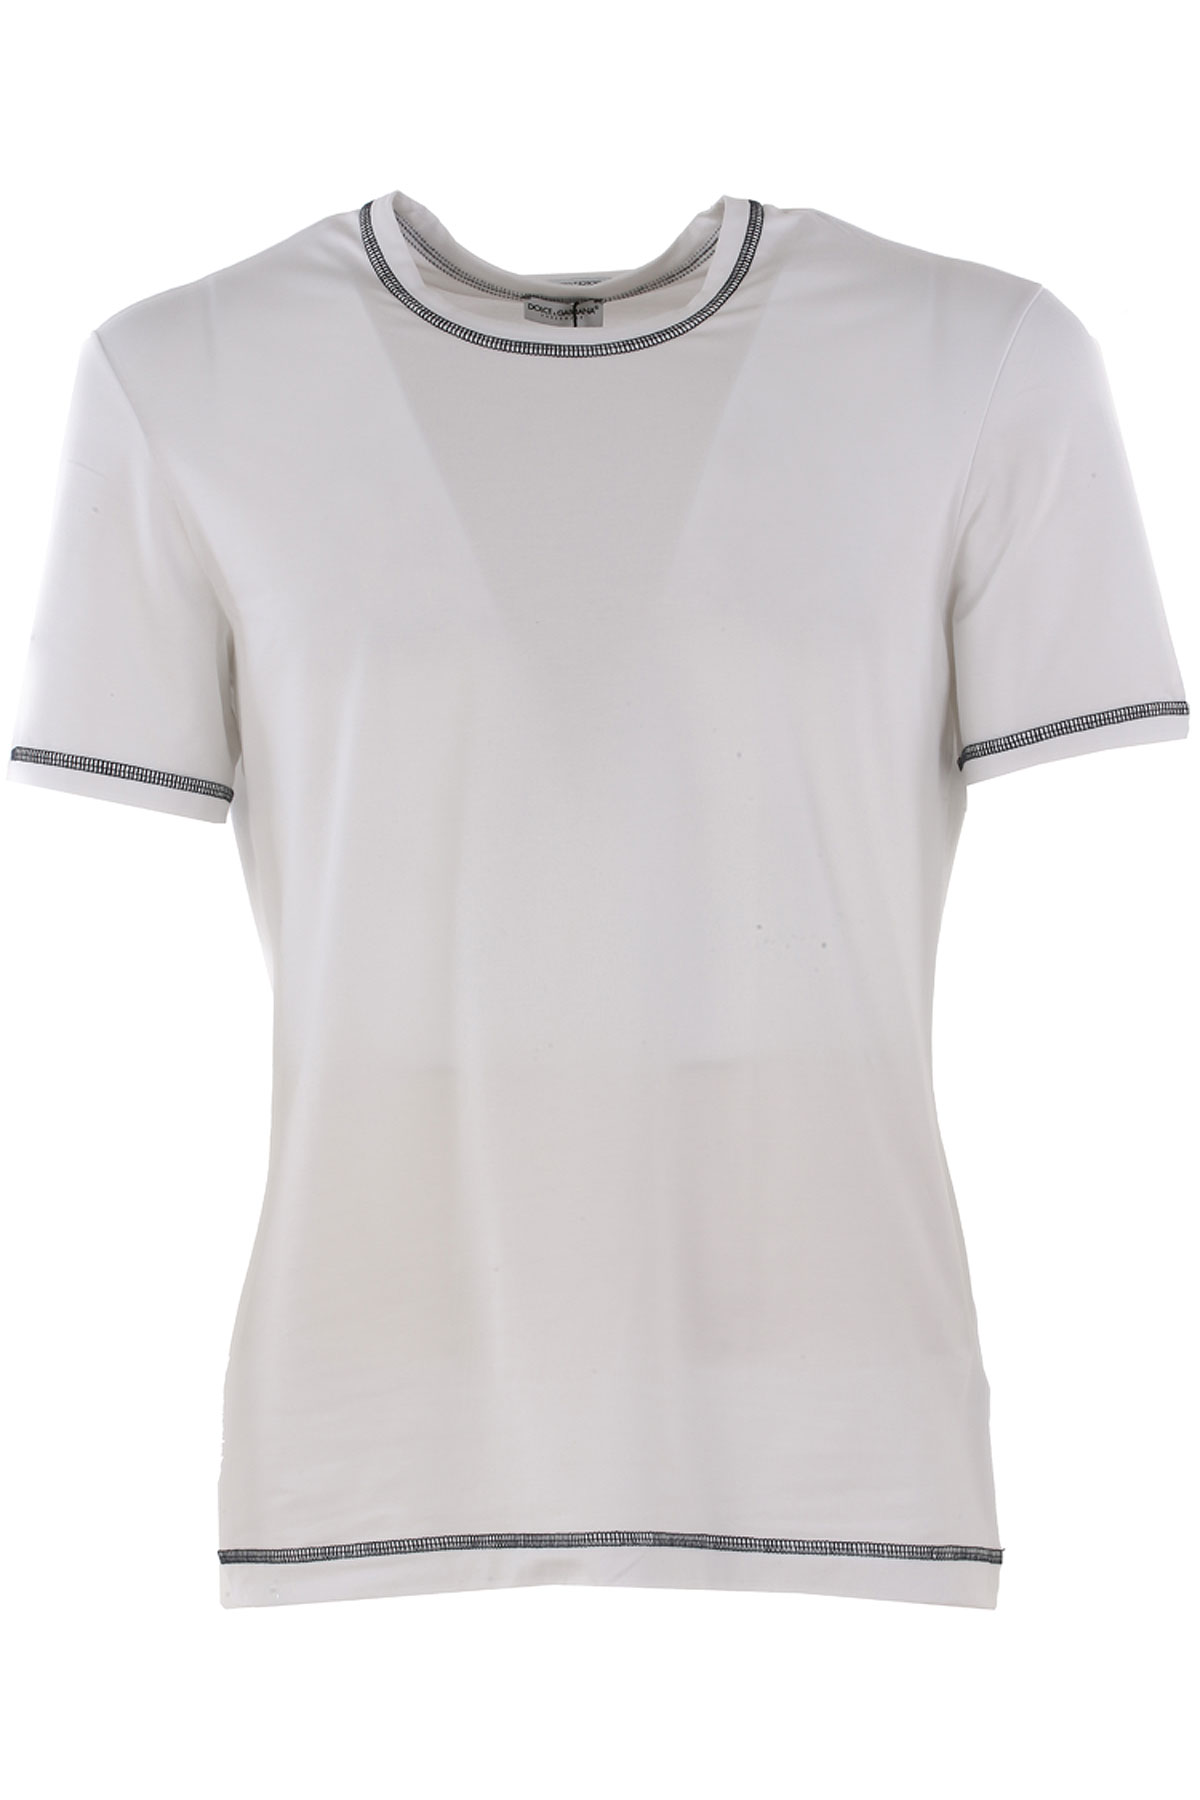 Dolce & Gabbana T-shirt Homme , Blanc, Coton, 2017, S XL